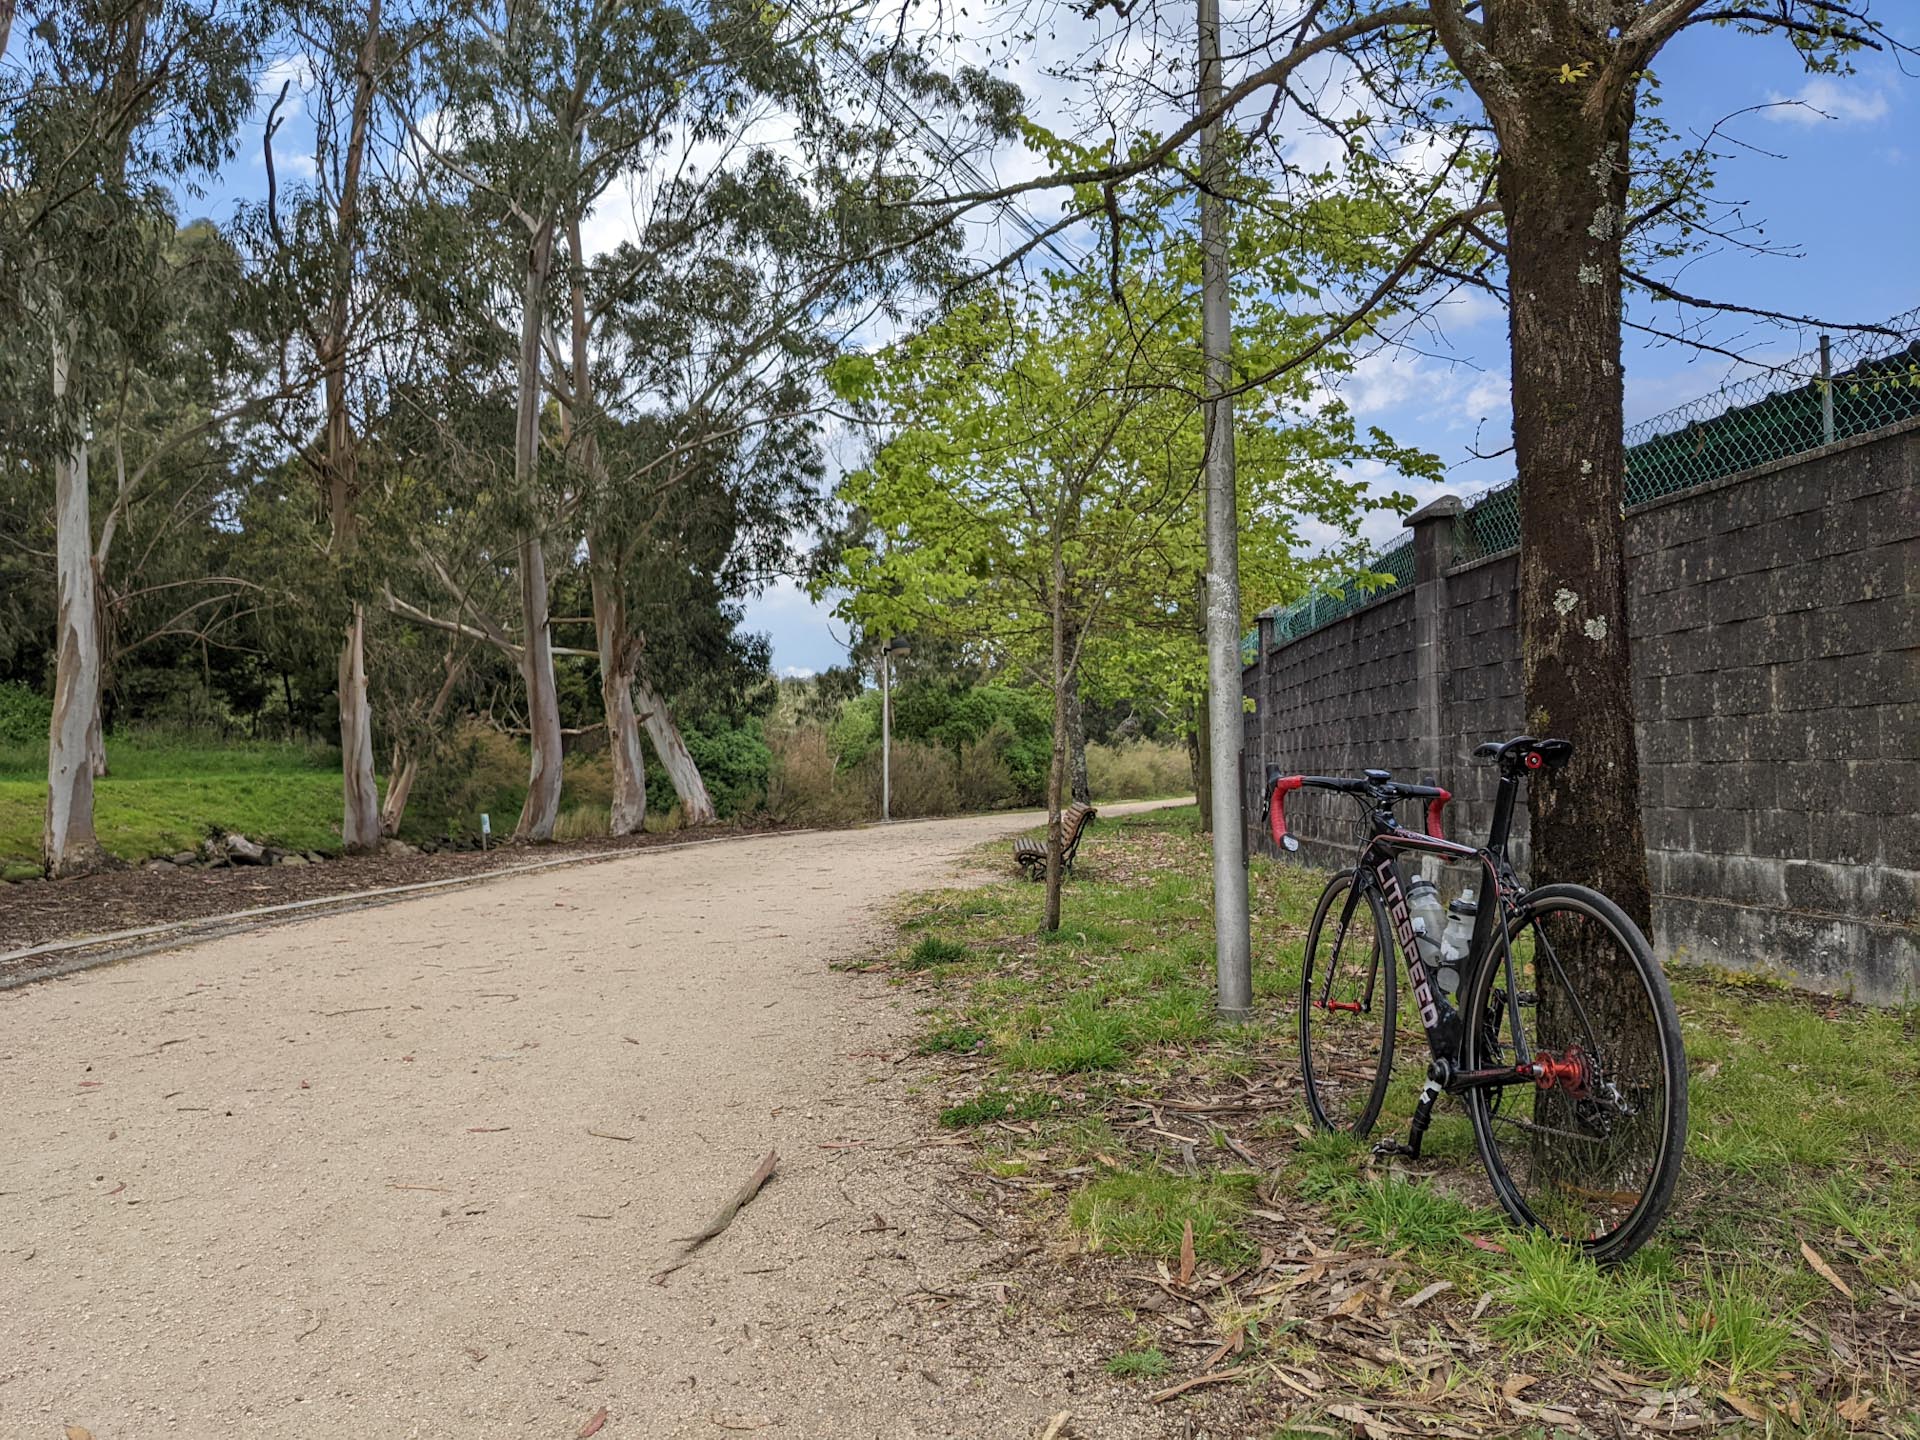 The Super Bike against a tree on a gravel recreation trail in Pontevedra, Spain.